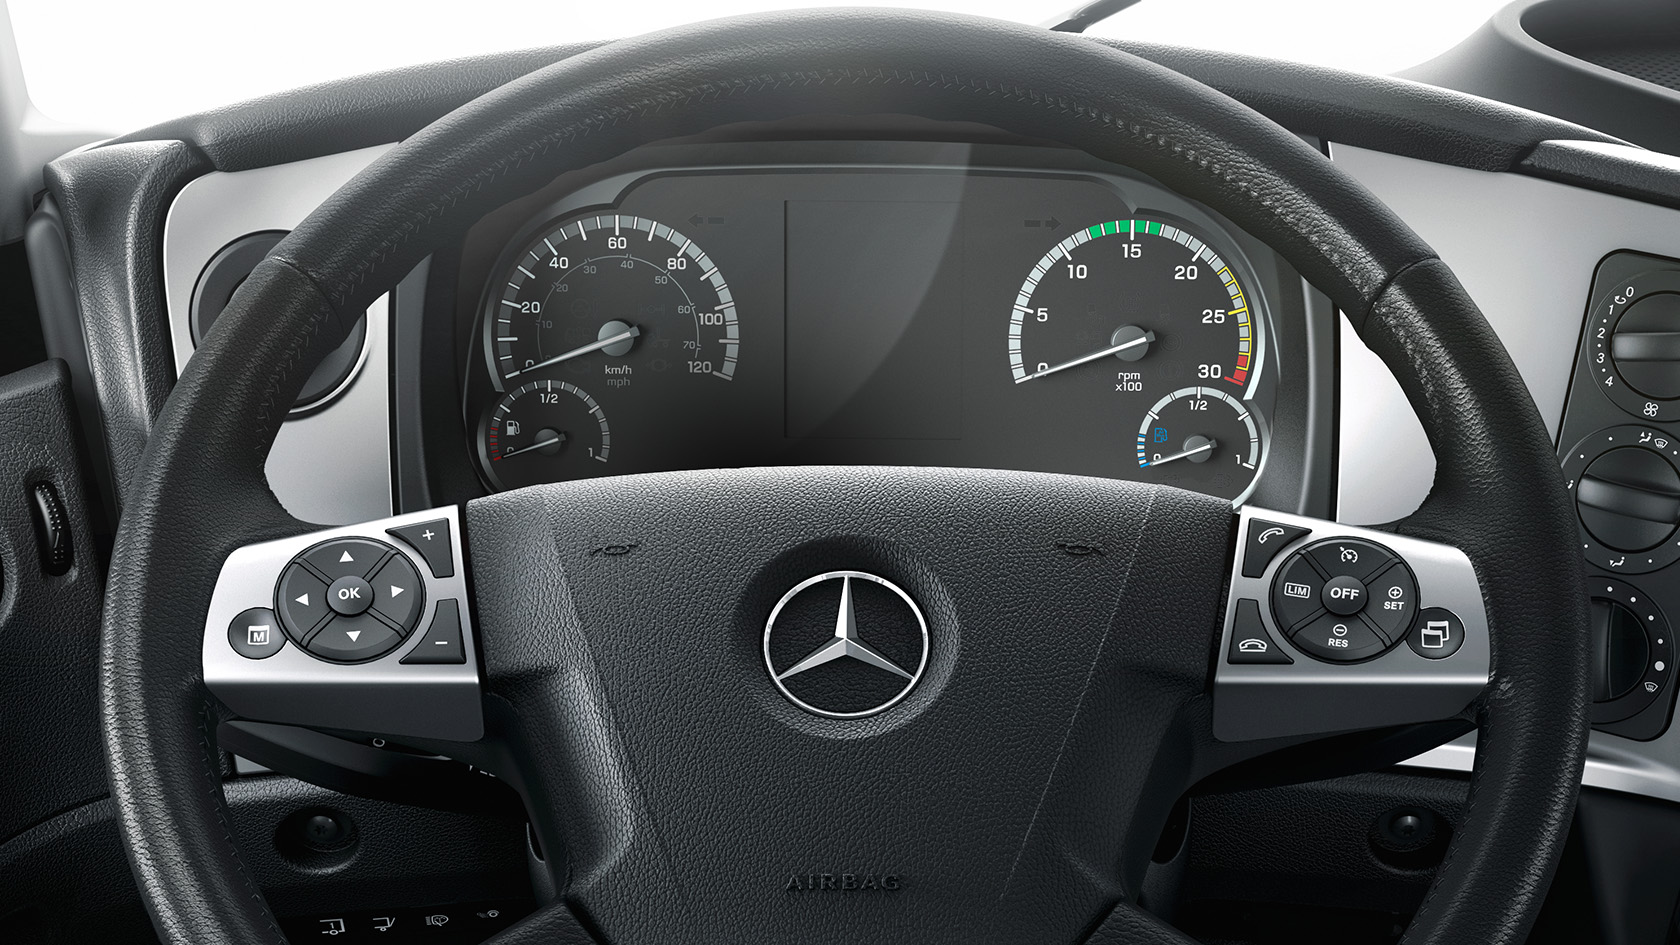 Atego: Genuine Accessories - Mercedes-Benz Trucks - Trucks you can trust